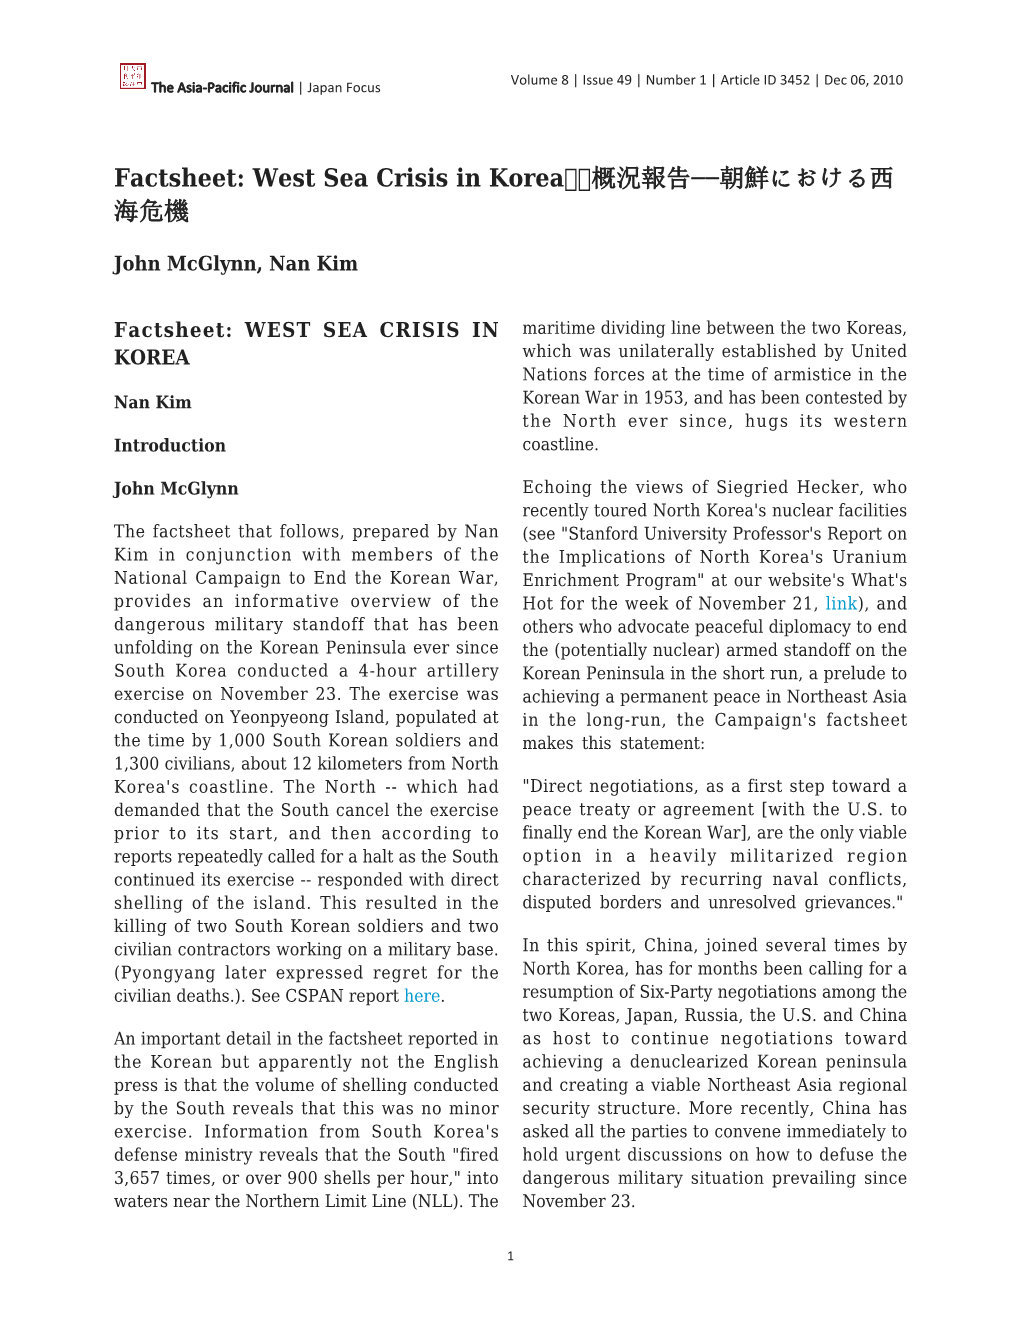 West Sea Crisis in Korea 概況報告−−朝鮮における西 海危機